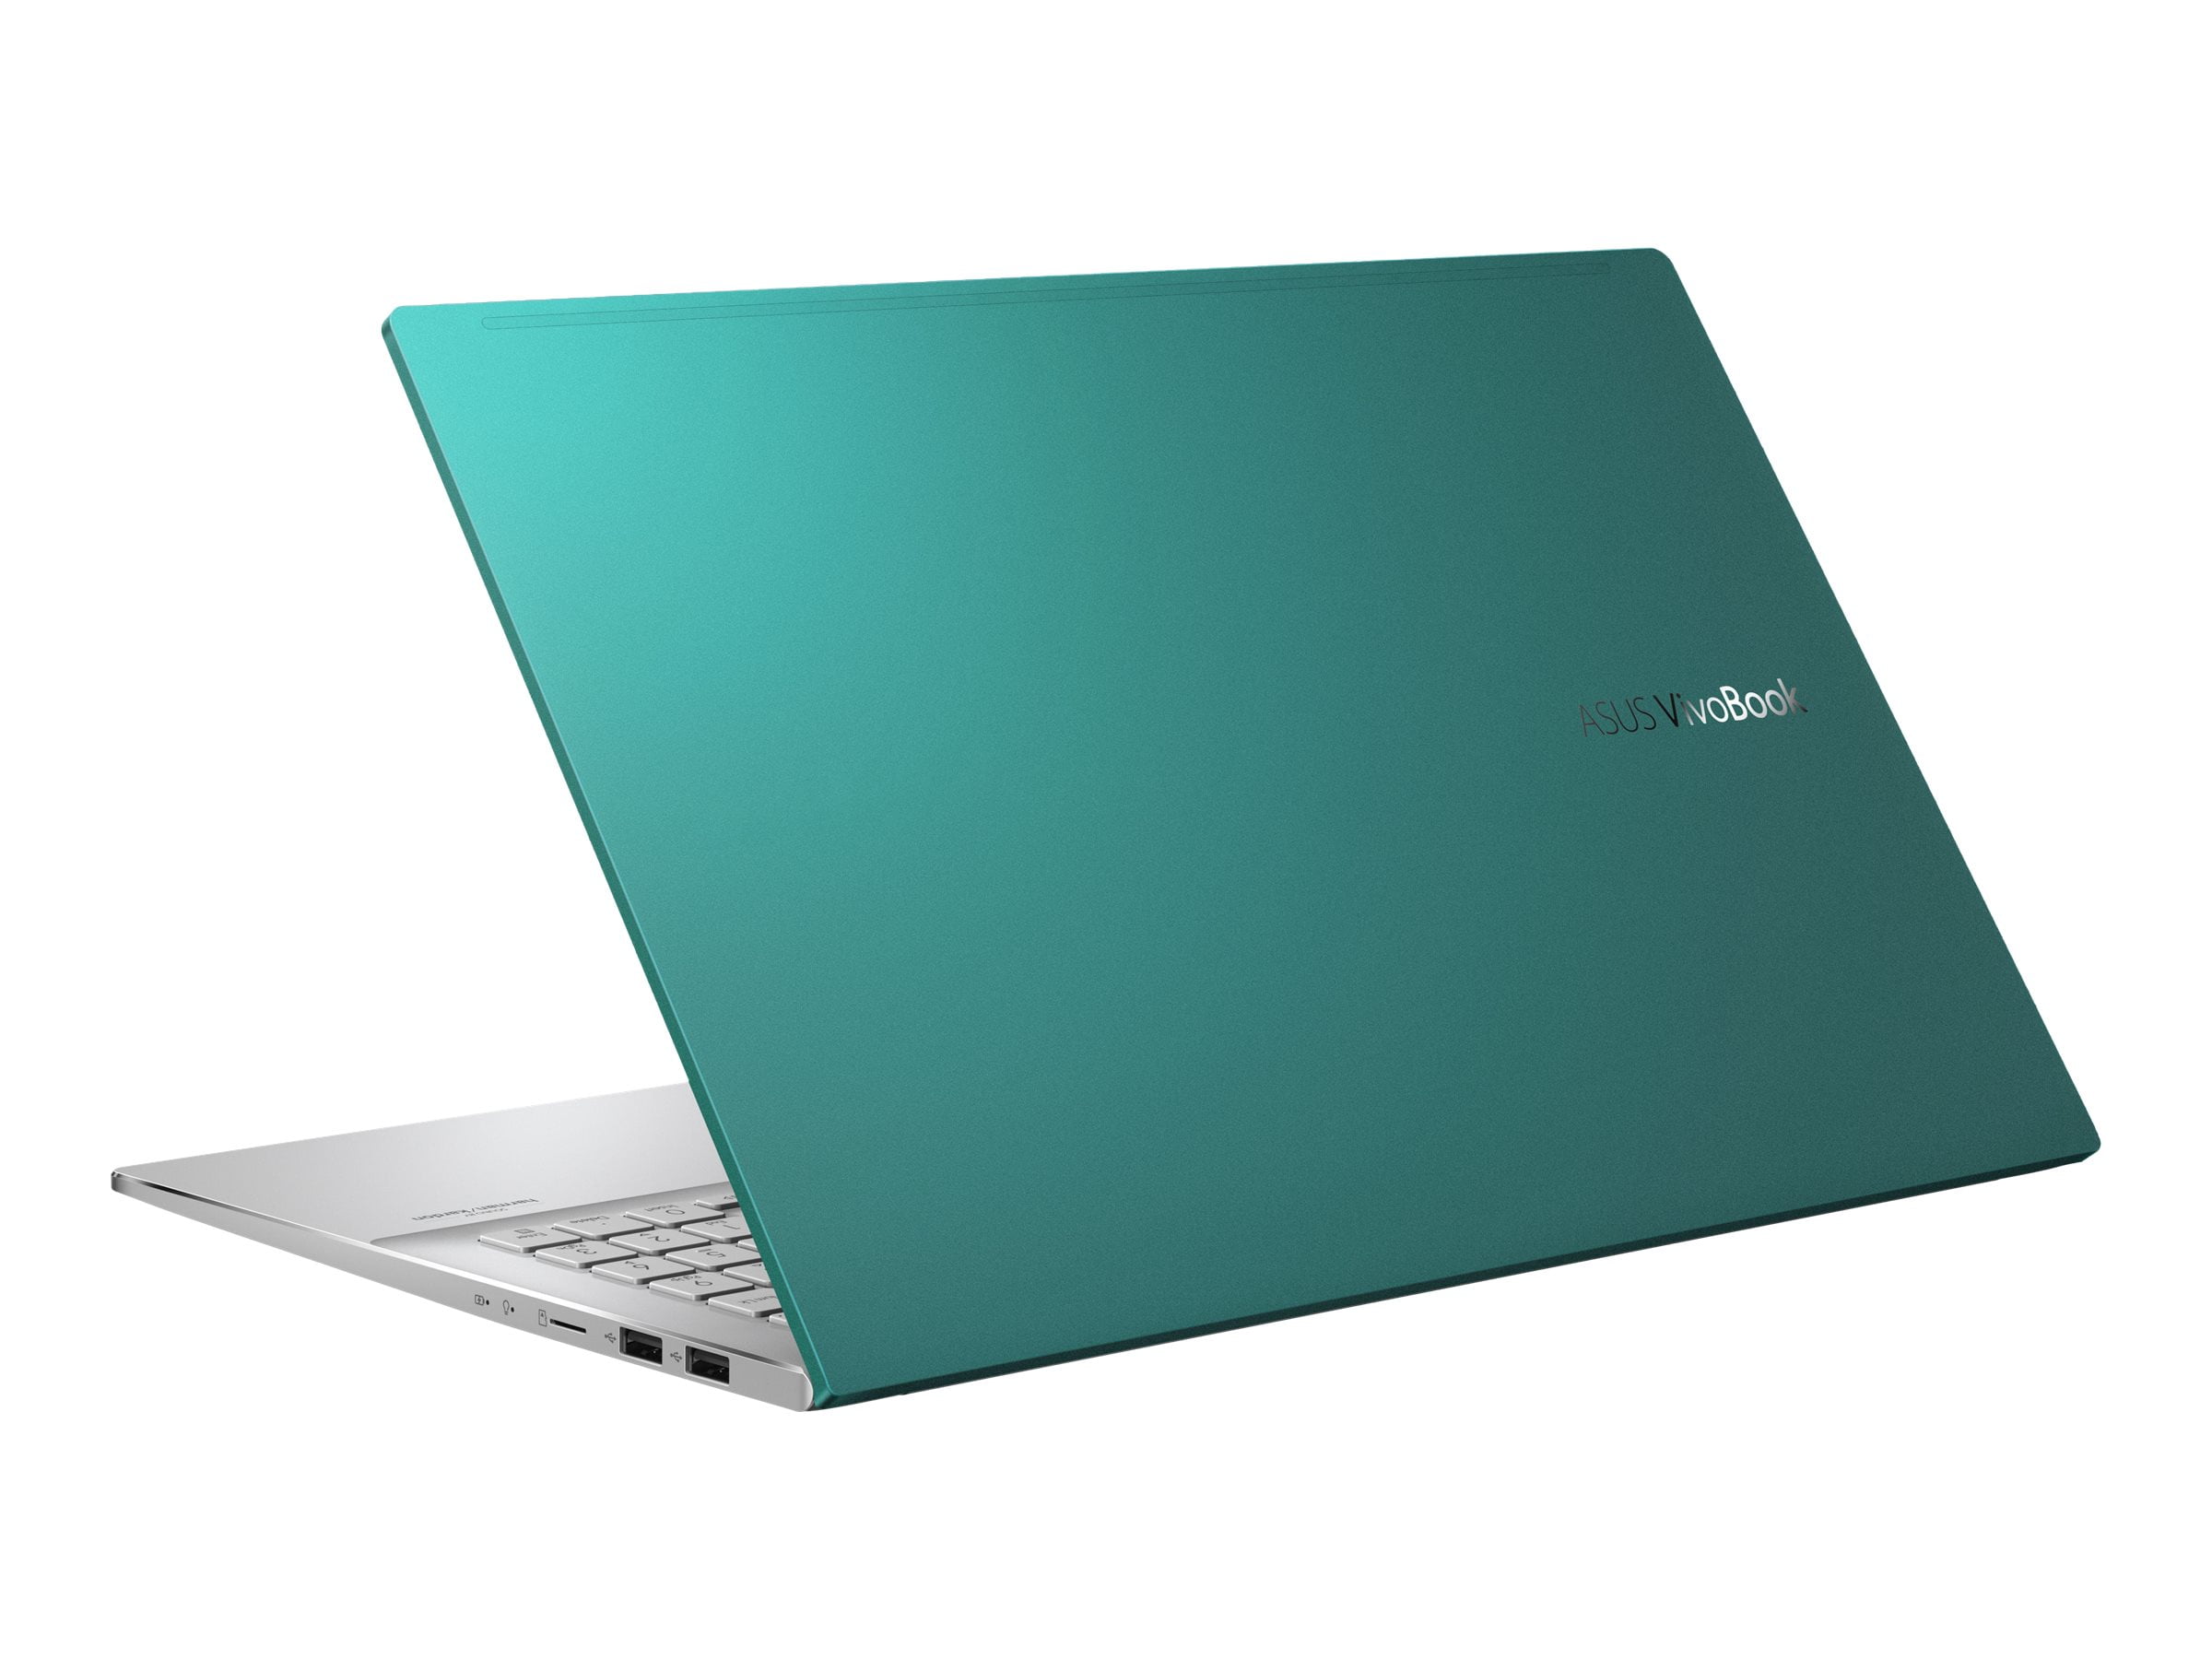 Weiland Absoluut Zwijgend Asus VivoBook S15 15.6" Full HD Laptop, Intel Core i5 i5-1135G7, 8GB RAM,  512GB SSD, Windows 10 Home, Gaia Green/Transparent Silver, S533EA-DH51-GN -  Walmart.com